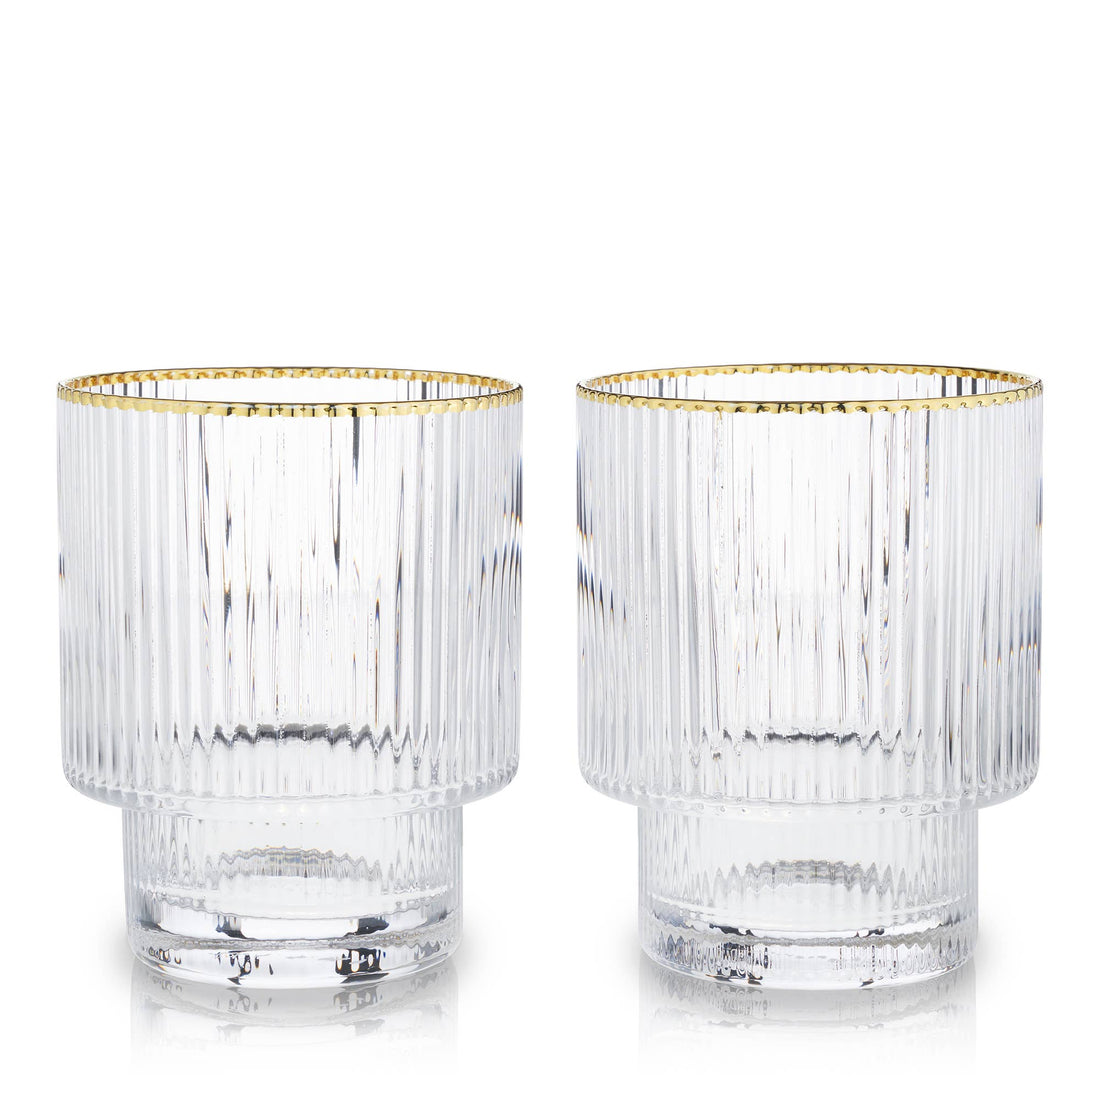 Meridian Ripple Tumbler Set of 2 - Durham DistilleryCocktail GlasswareShop for Pickup